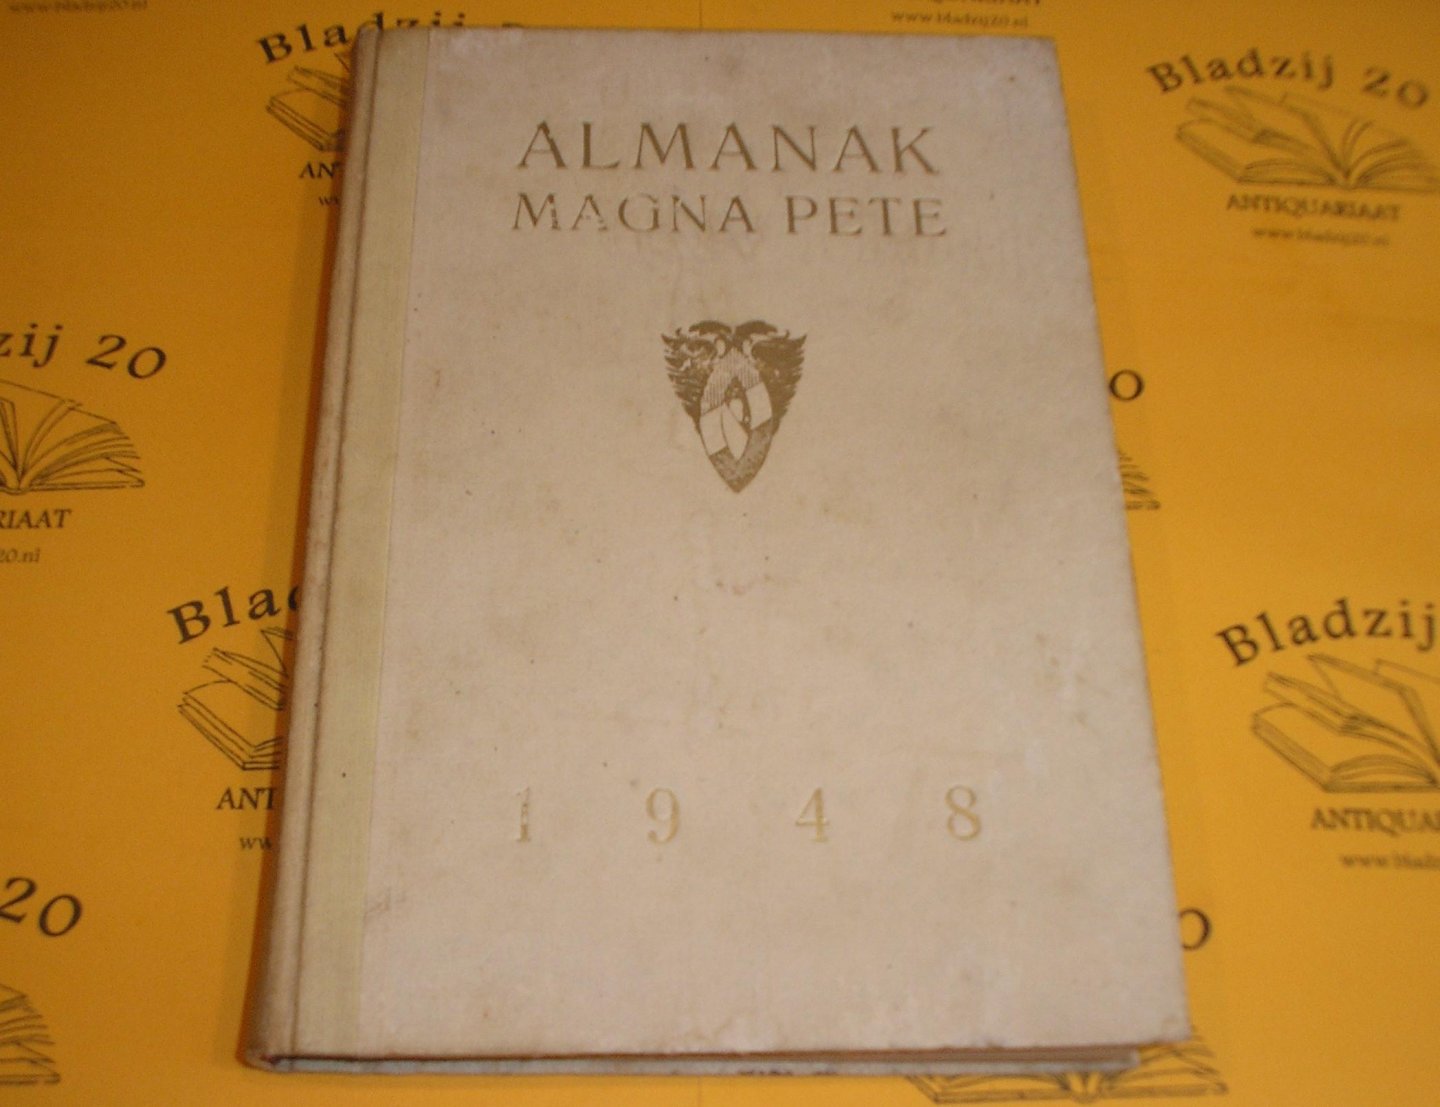 Almanak Magna Pete 1948. - Almanak der Groningse vrouwelijke studentenclub Magna Pete 1948.